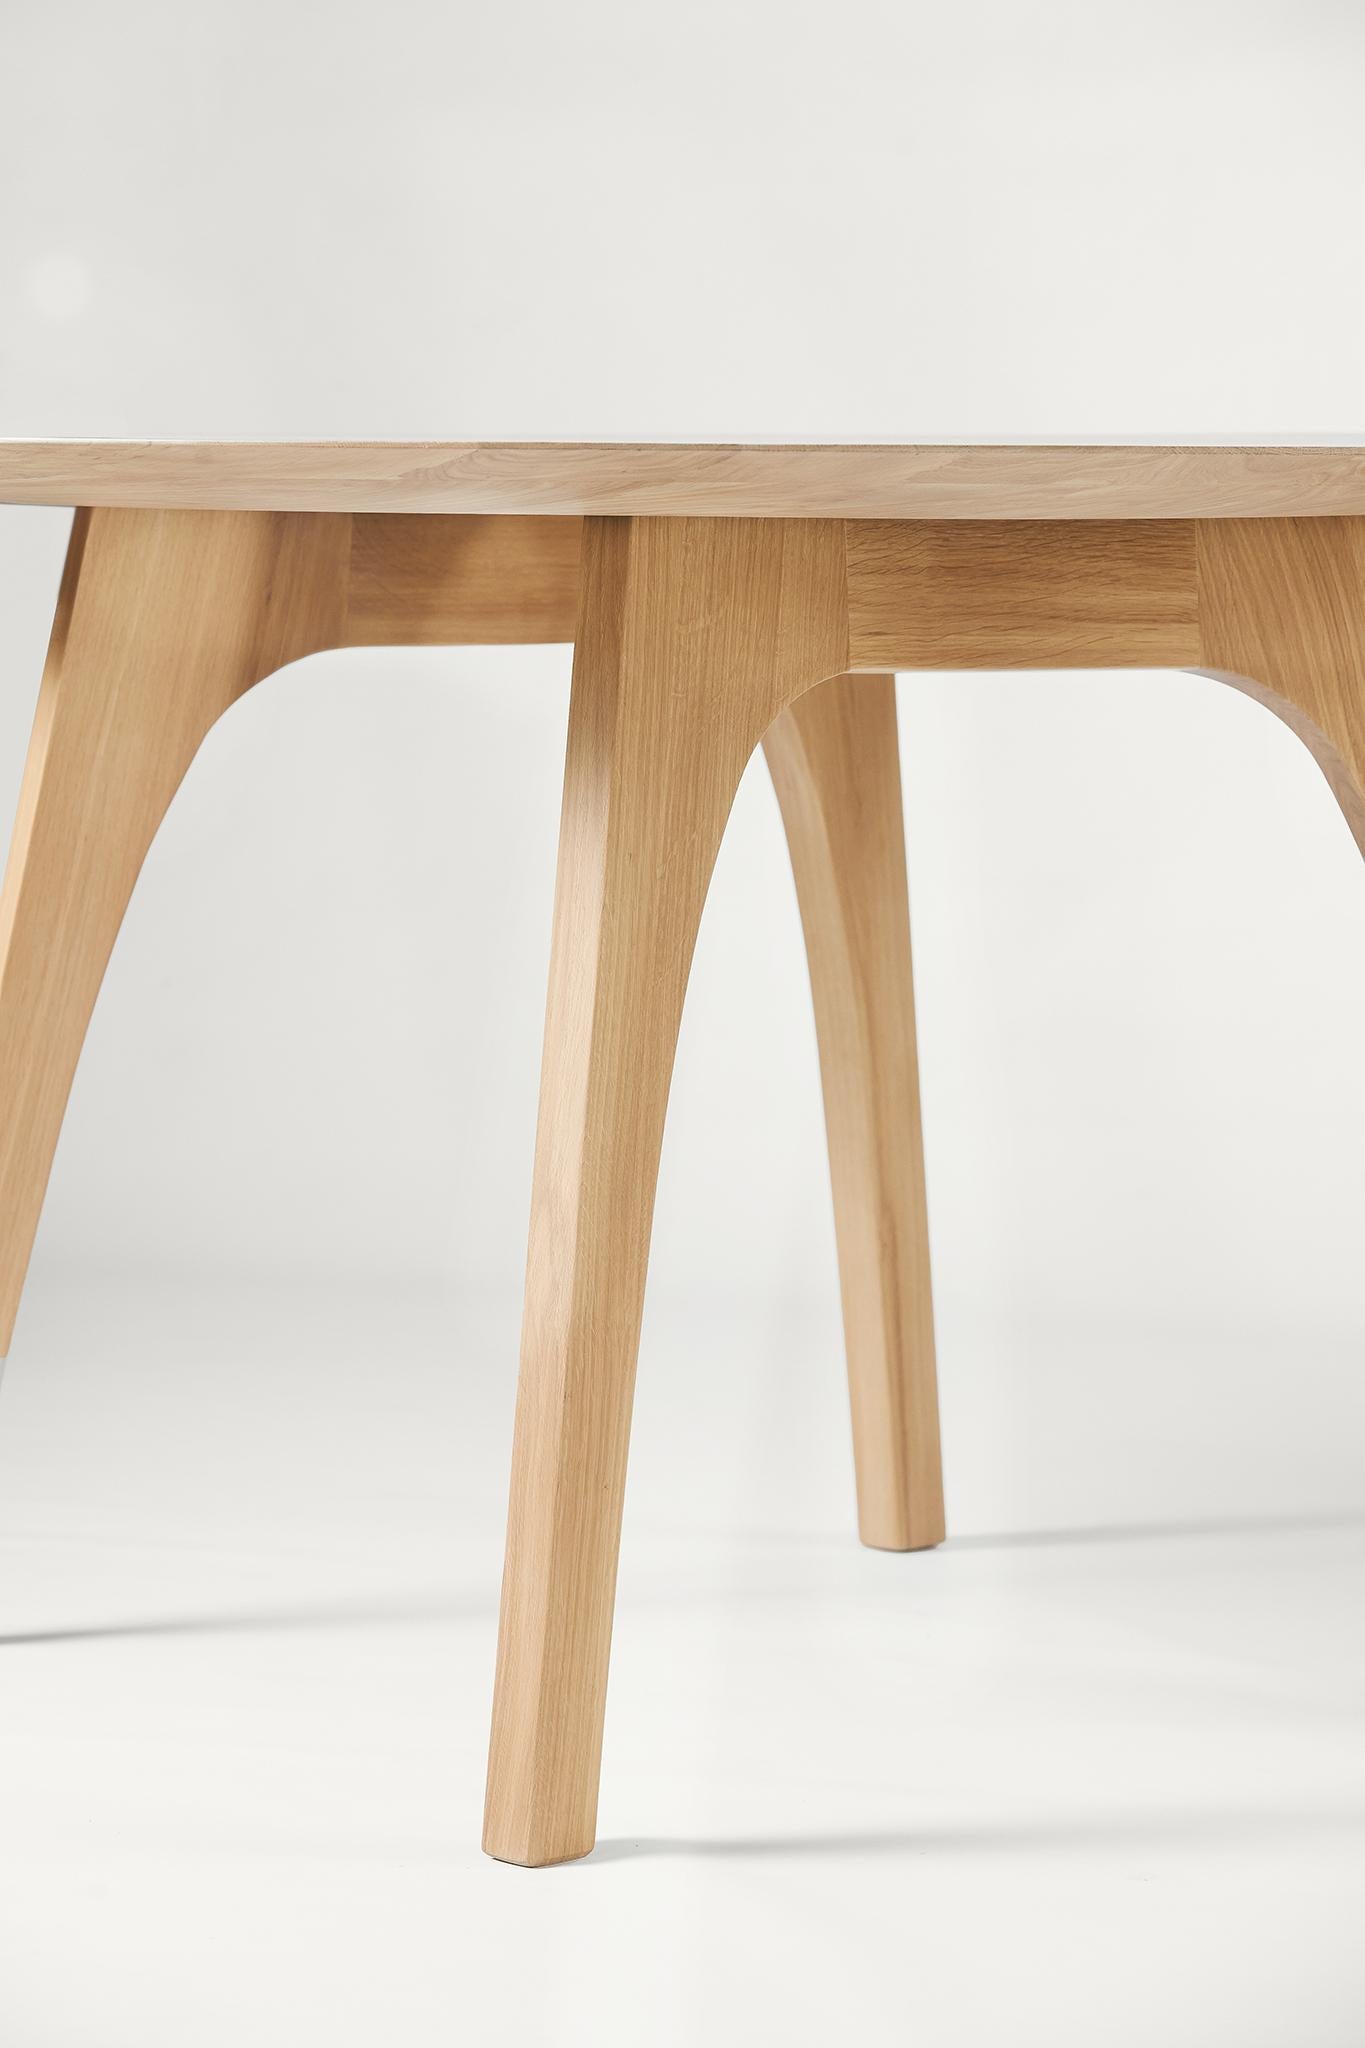 heron Table by Arbore x Lukas Heintschel Design In New Condition For Sale In Vetiş, RO